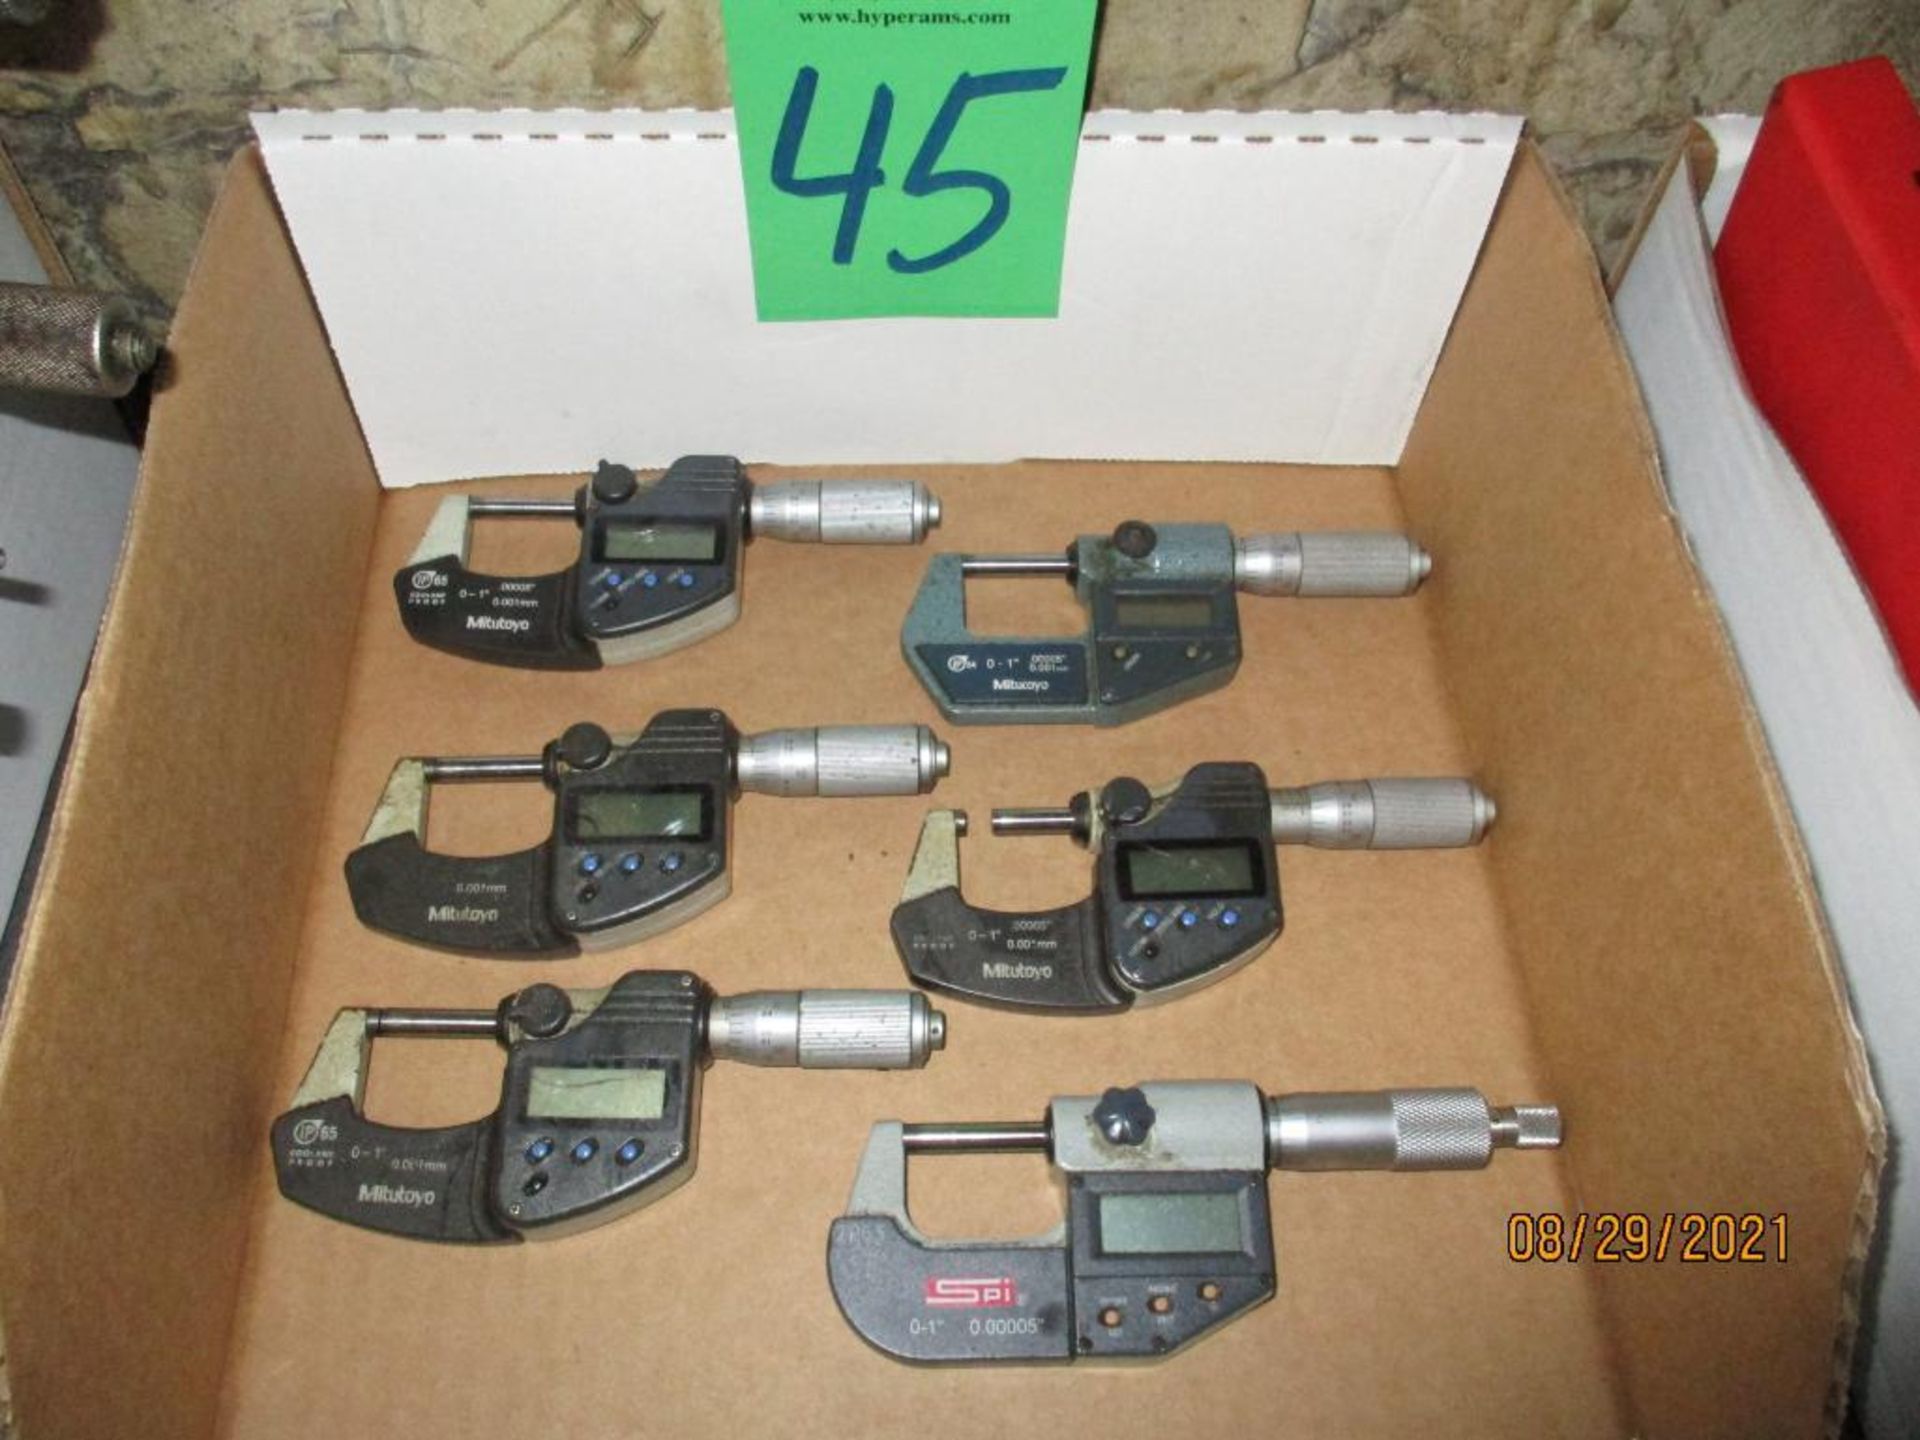 Six Digital Micrometers